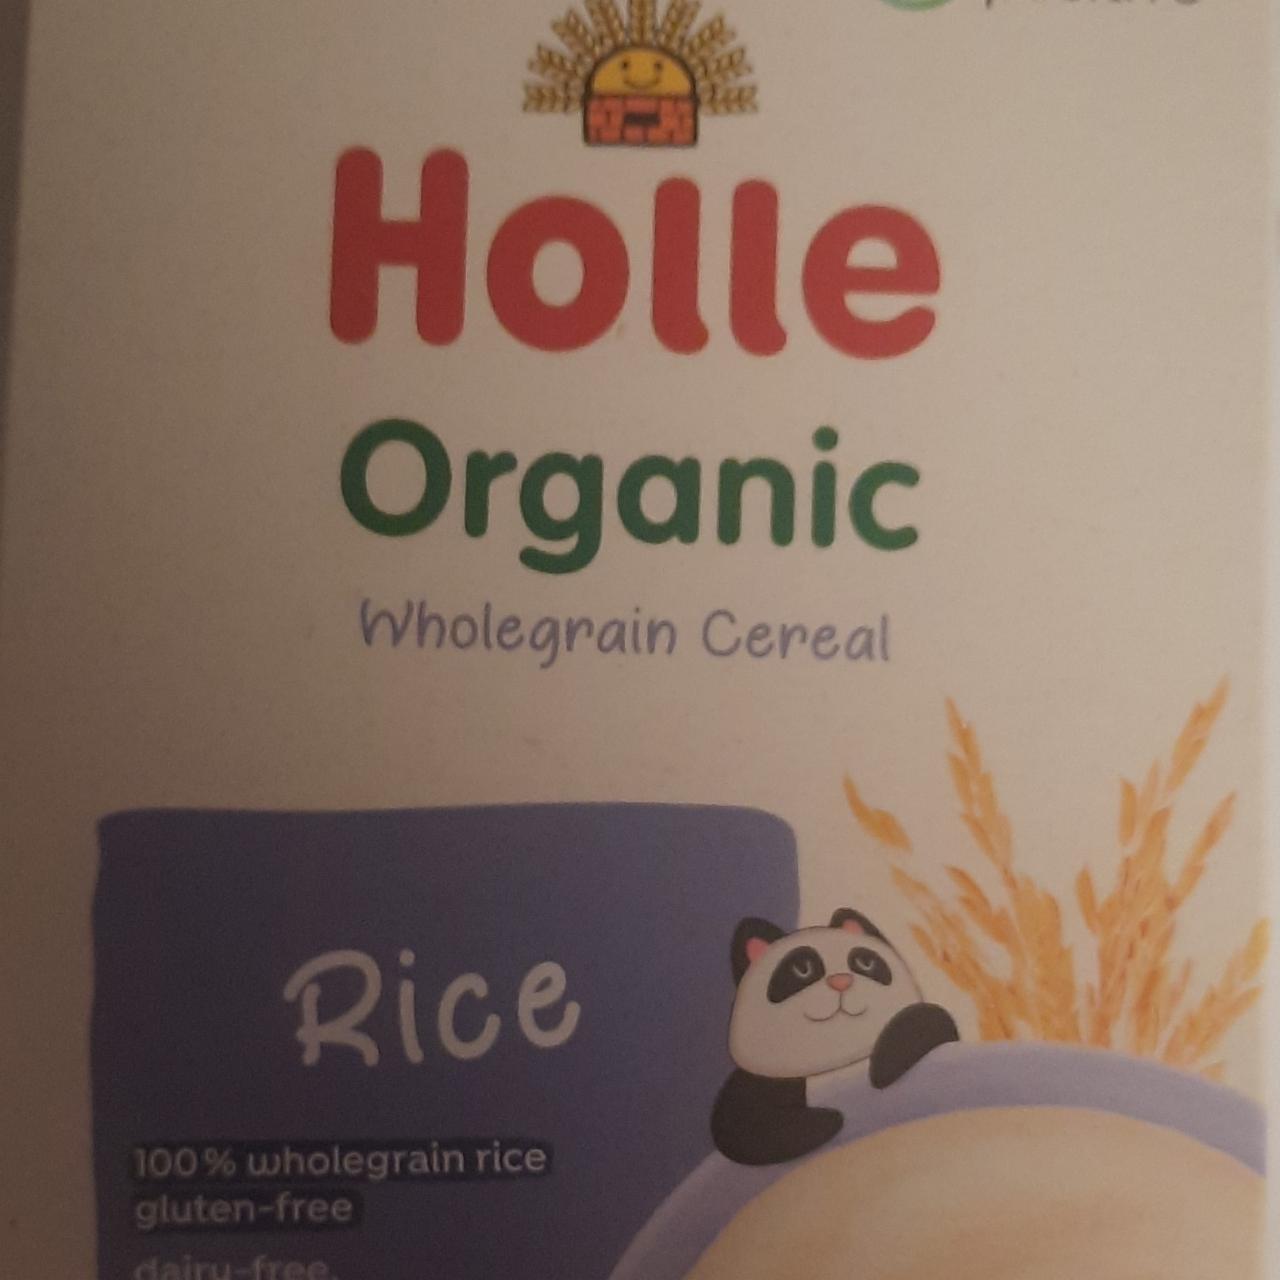 Fotografie - Organic wholegrain cereal Rice Holle